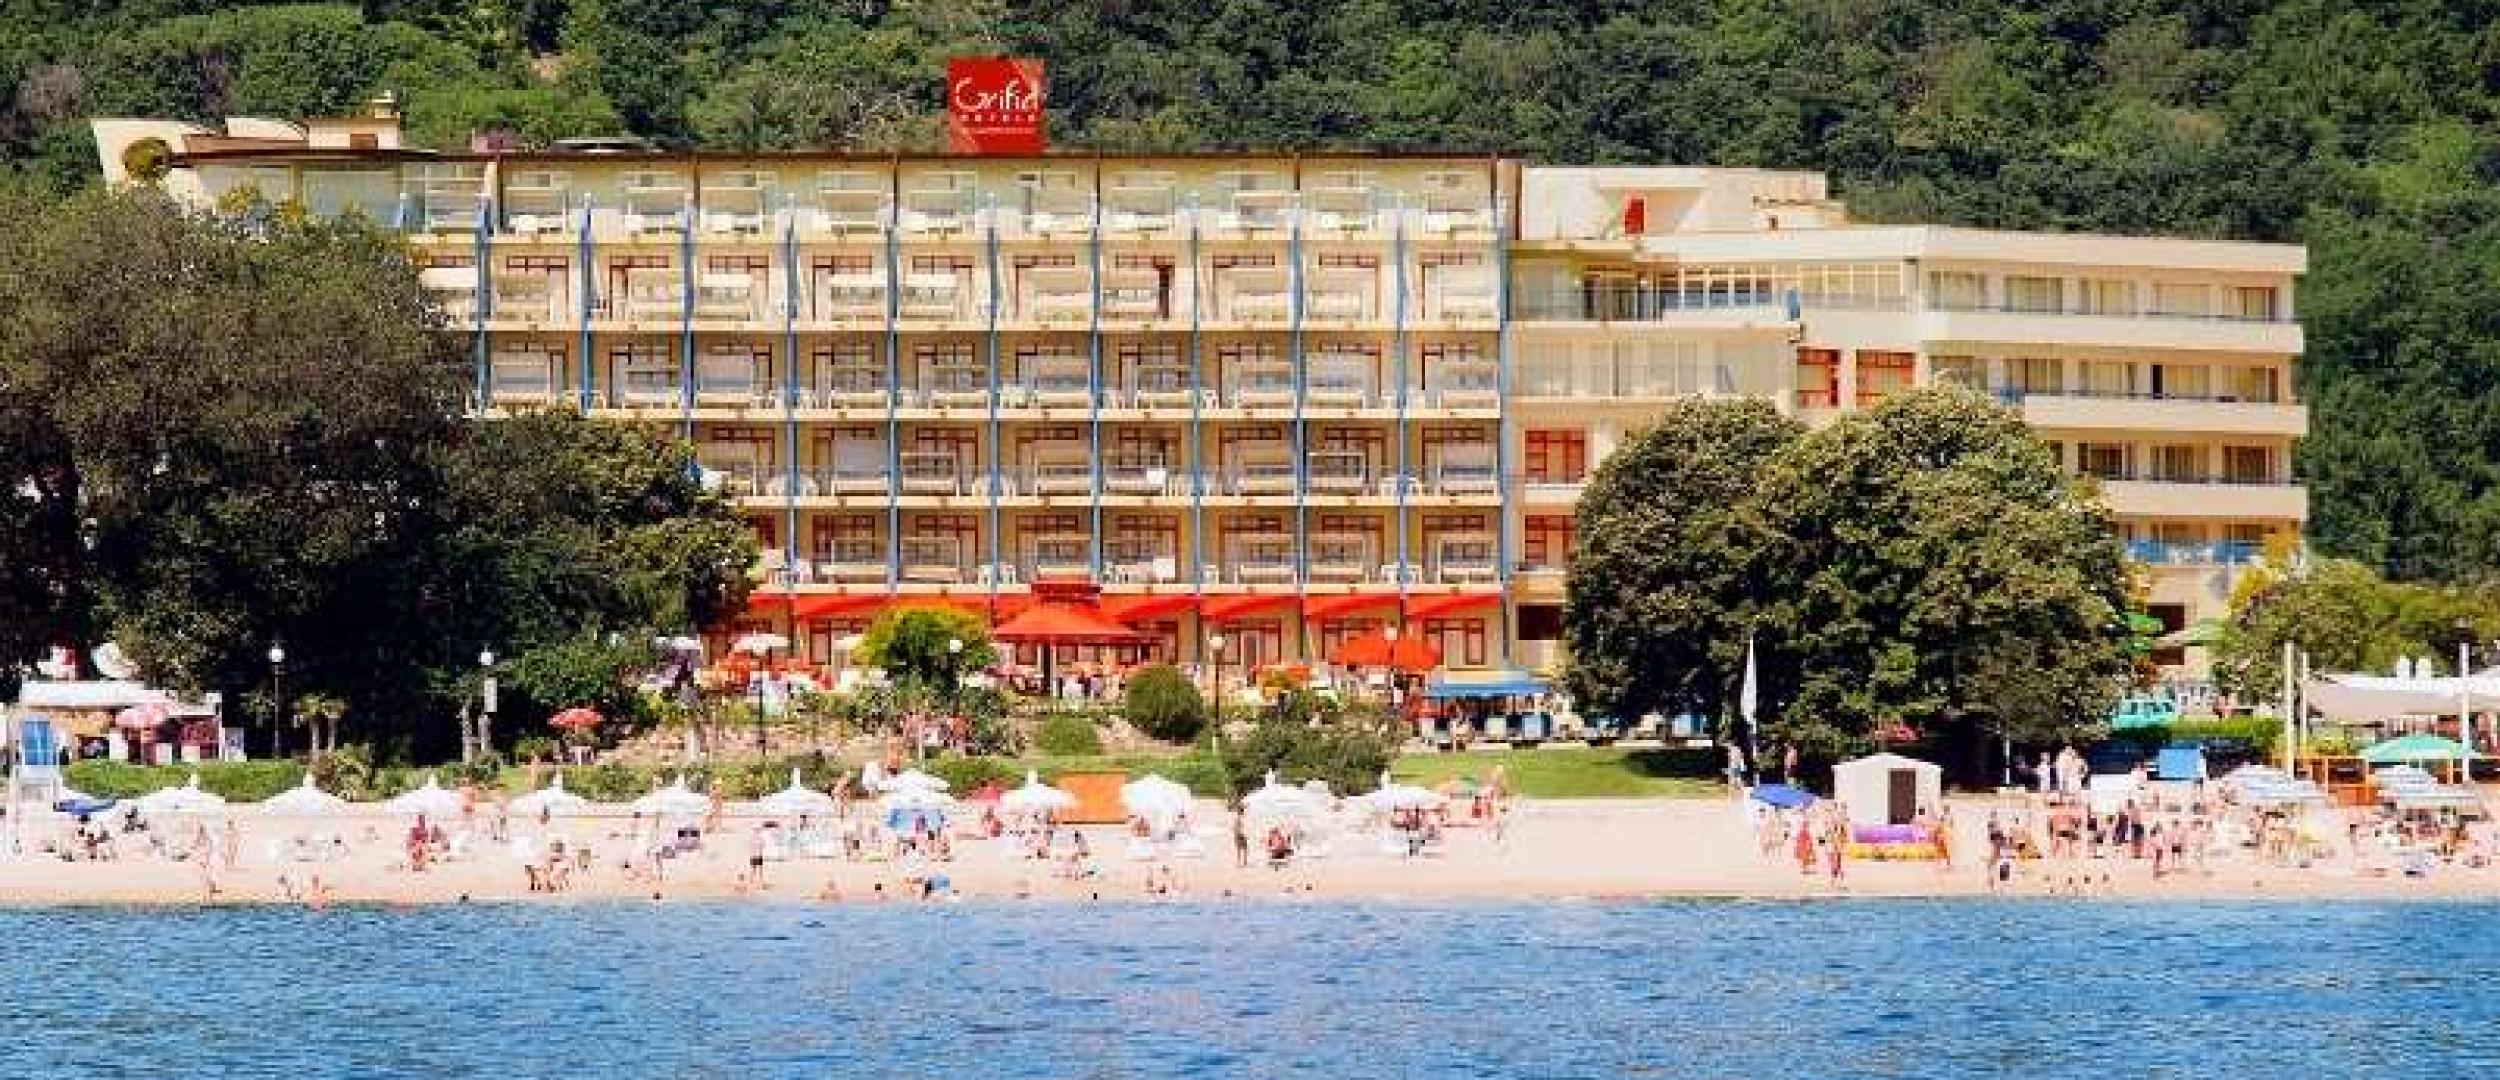 Hotel Grifid Vistamar 4 Nisipurile De Aur Bulgaria Agenţia De